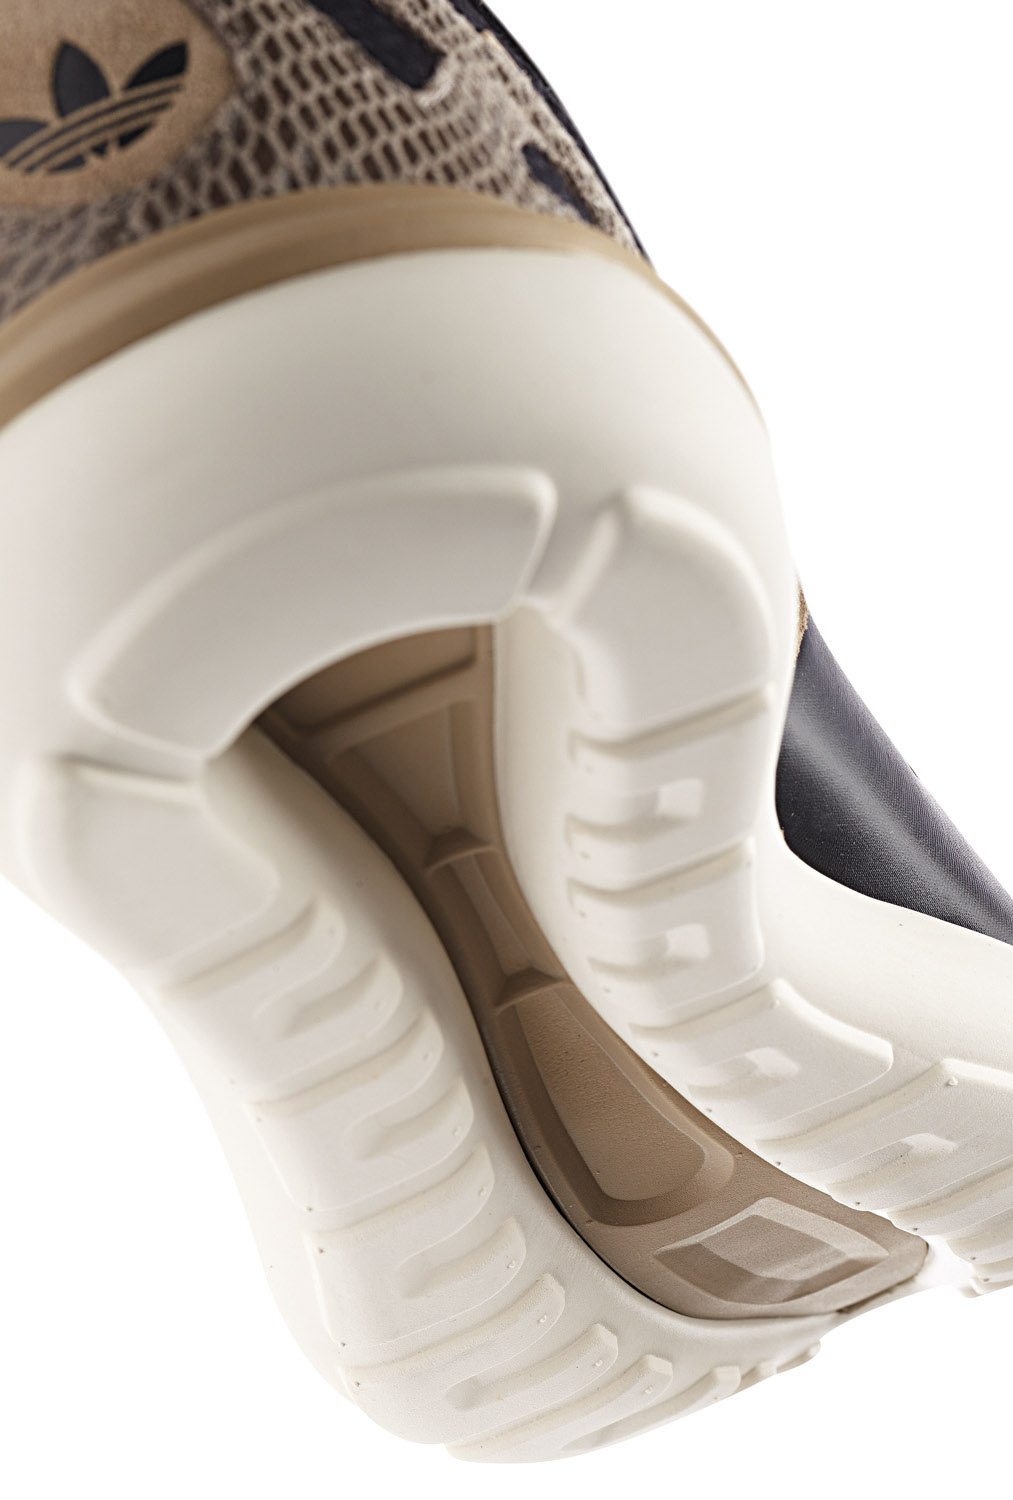 adidas Originals Tubular Runner Snake Pack 7